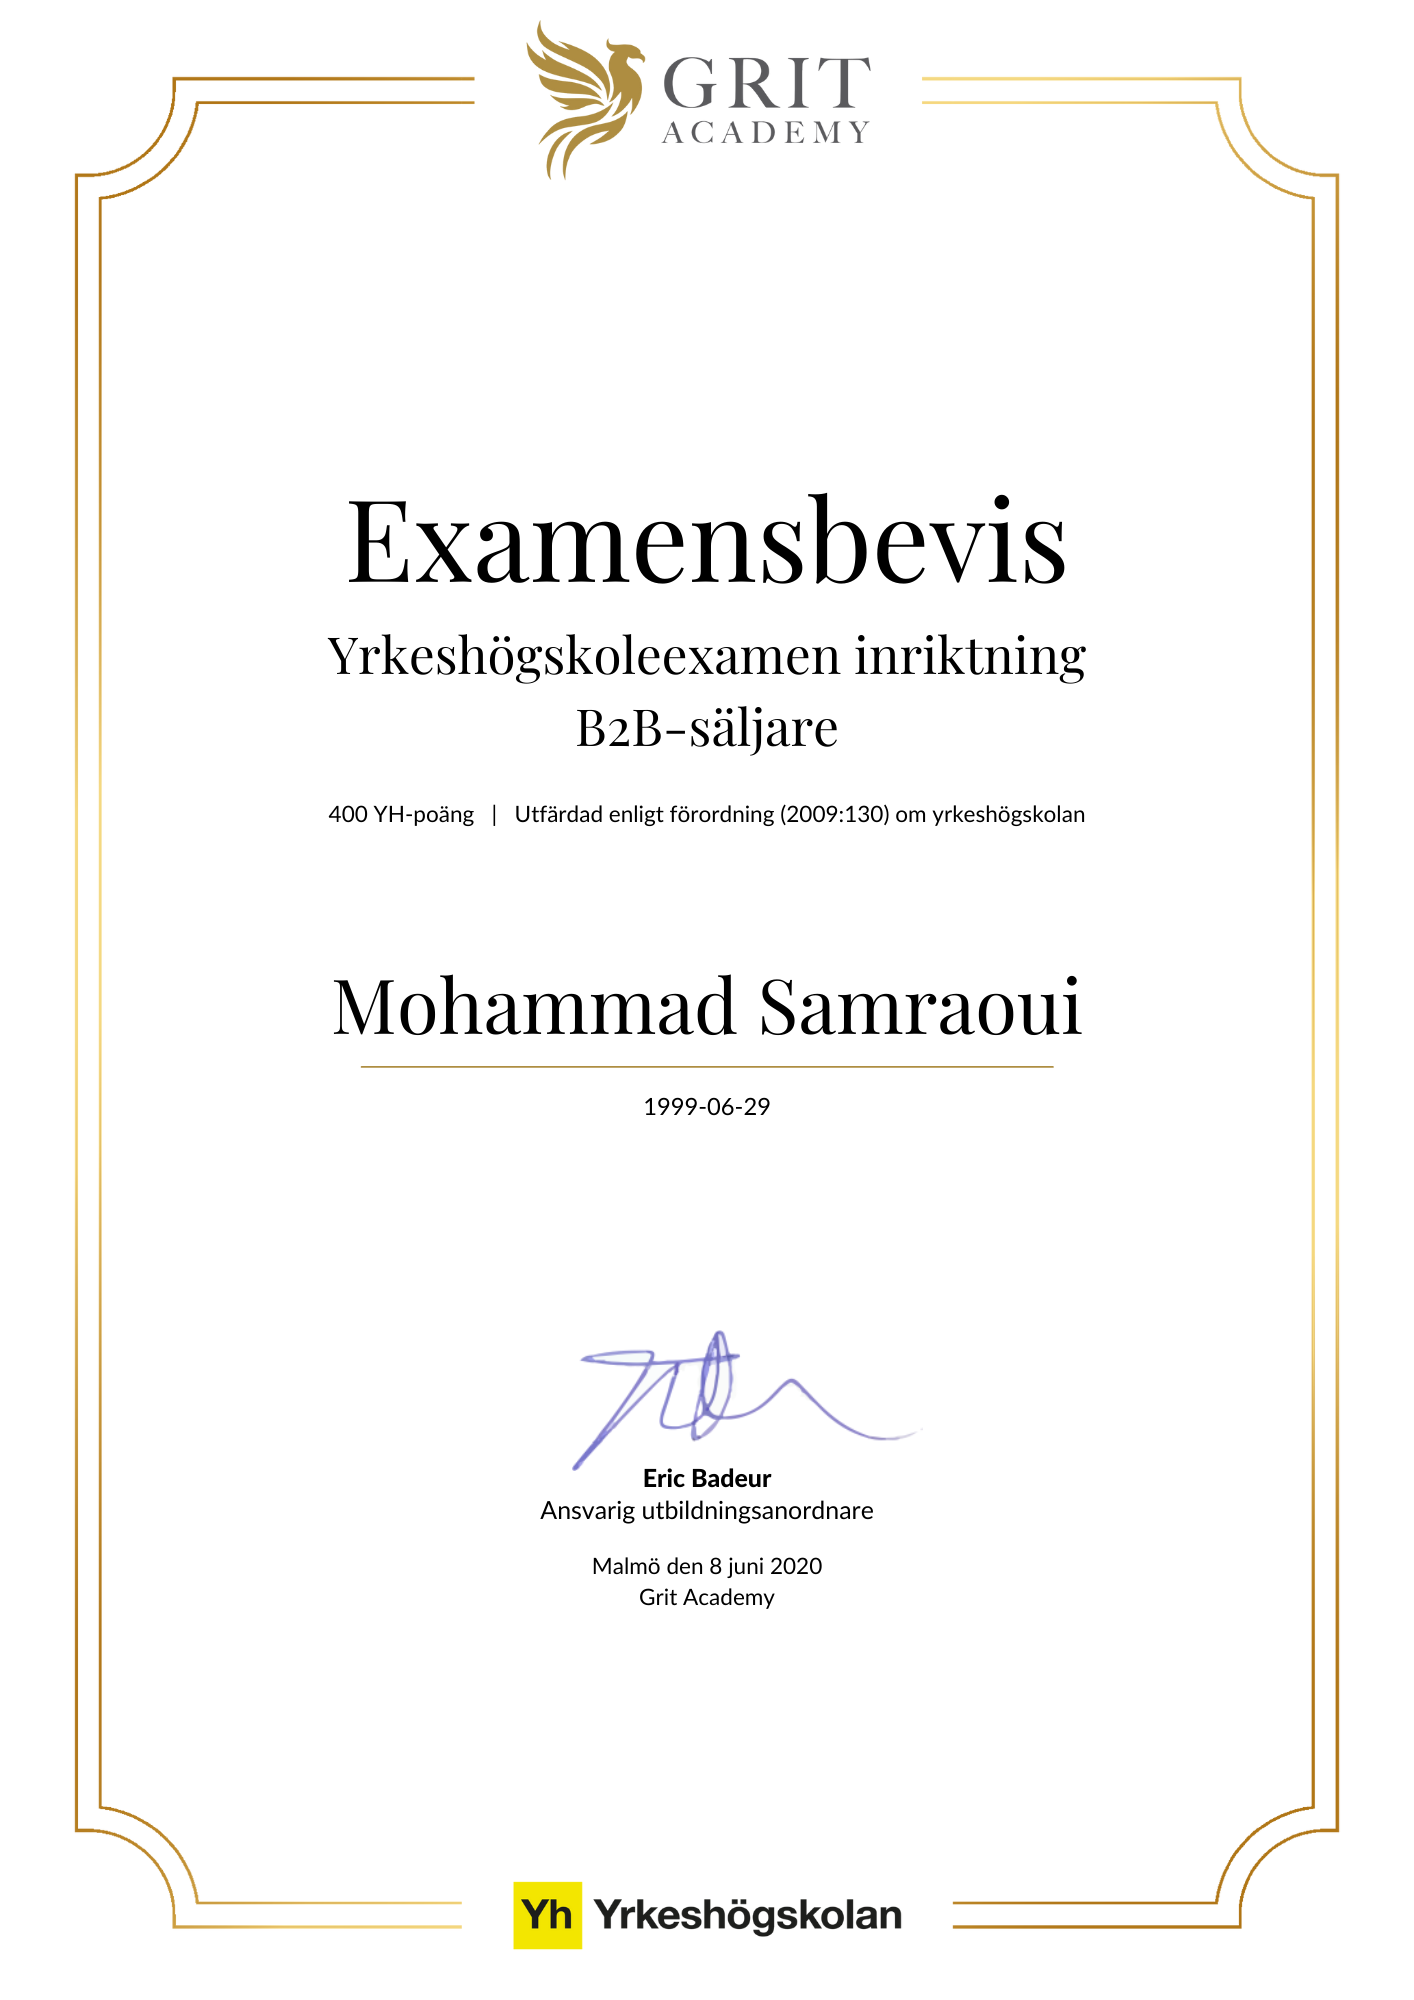 Examensbevis Mohammad Samraoui - 1